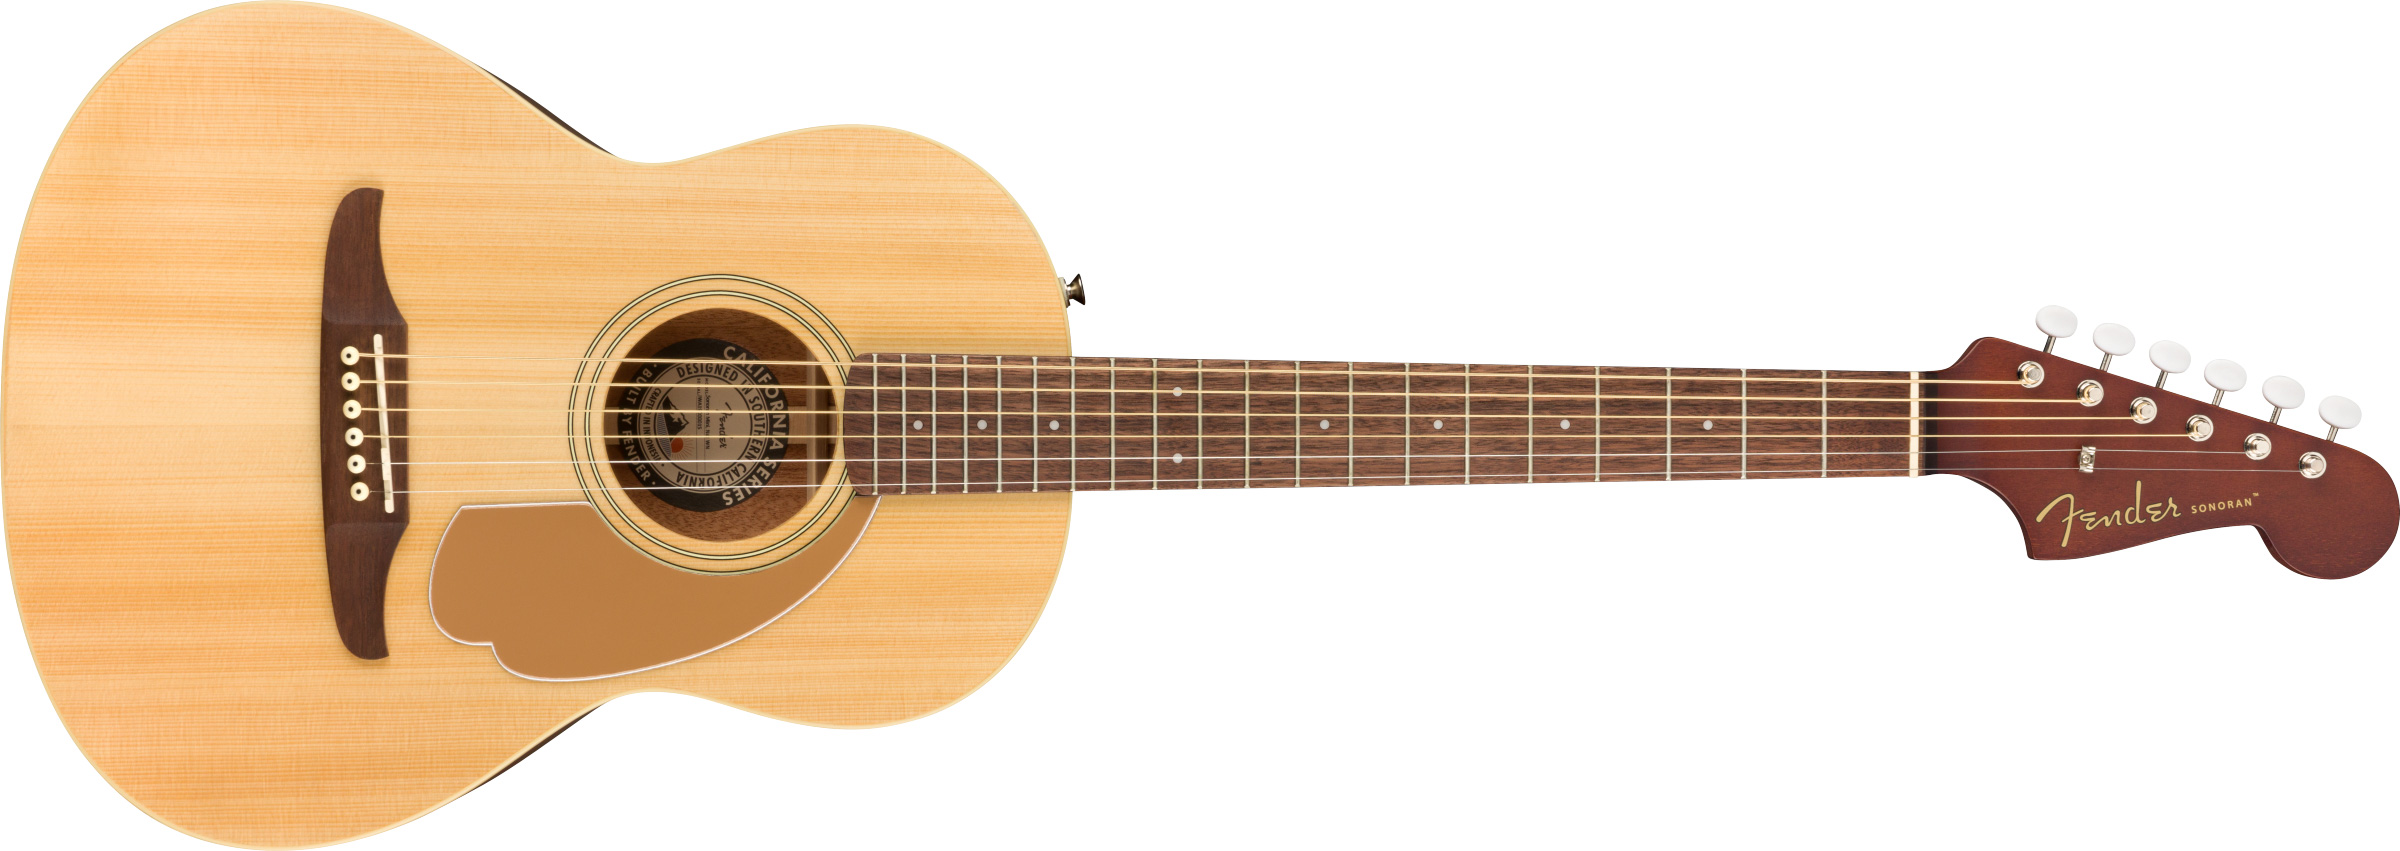 Fender Sonoran Mini Dreadnought Acoustic Guitar - Natural